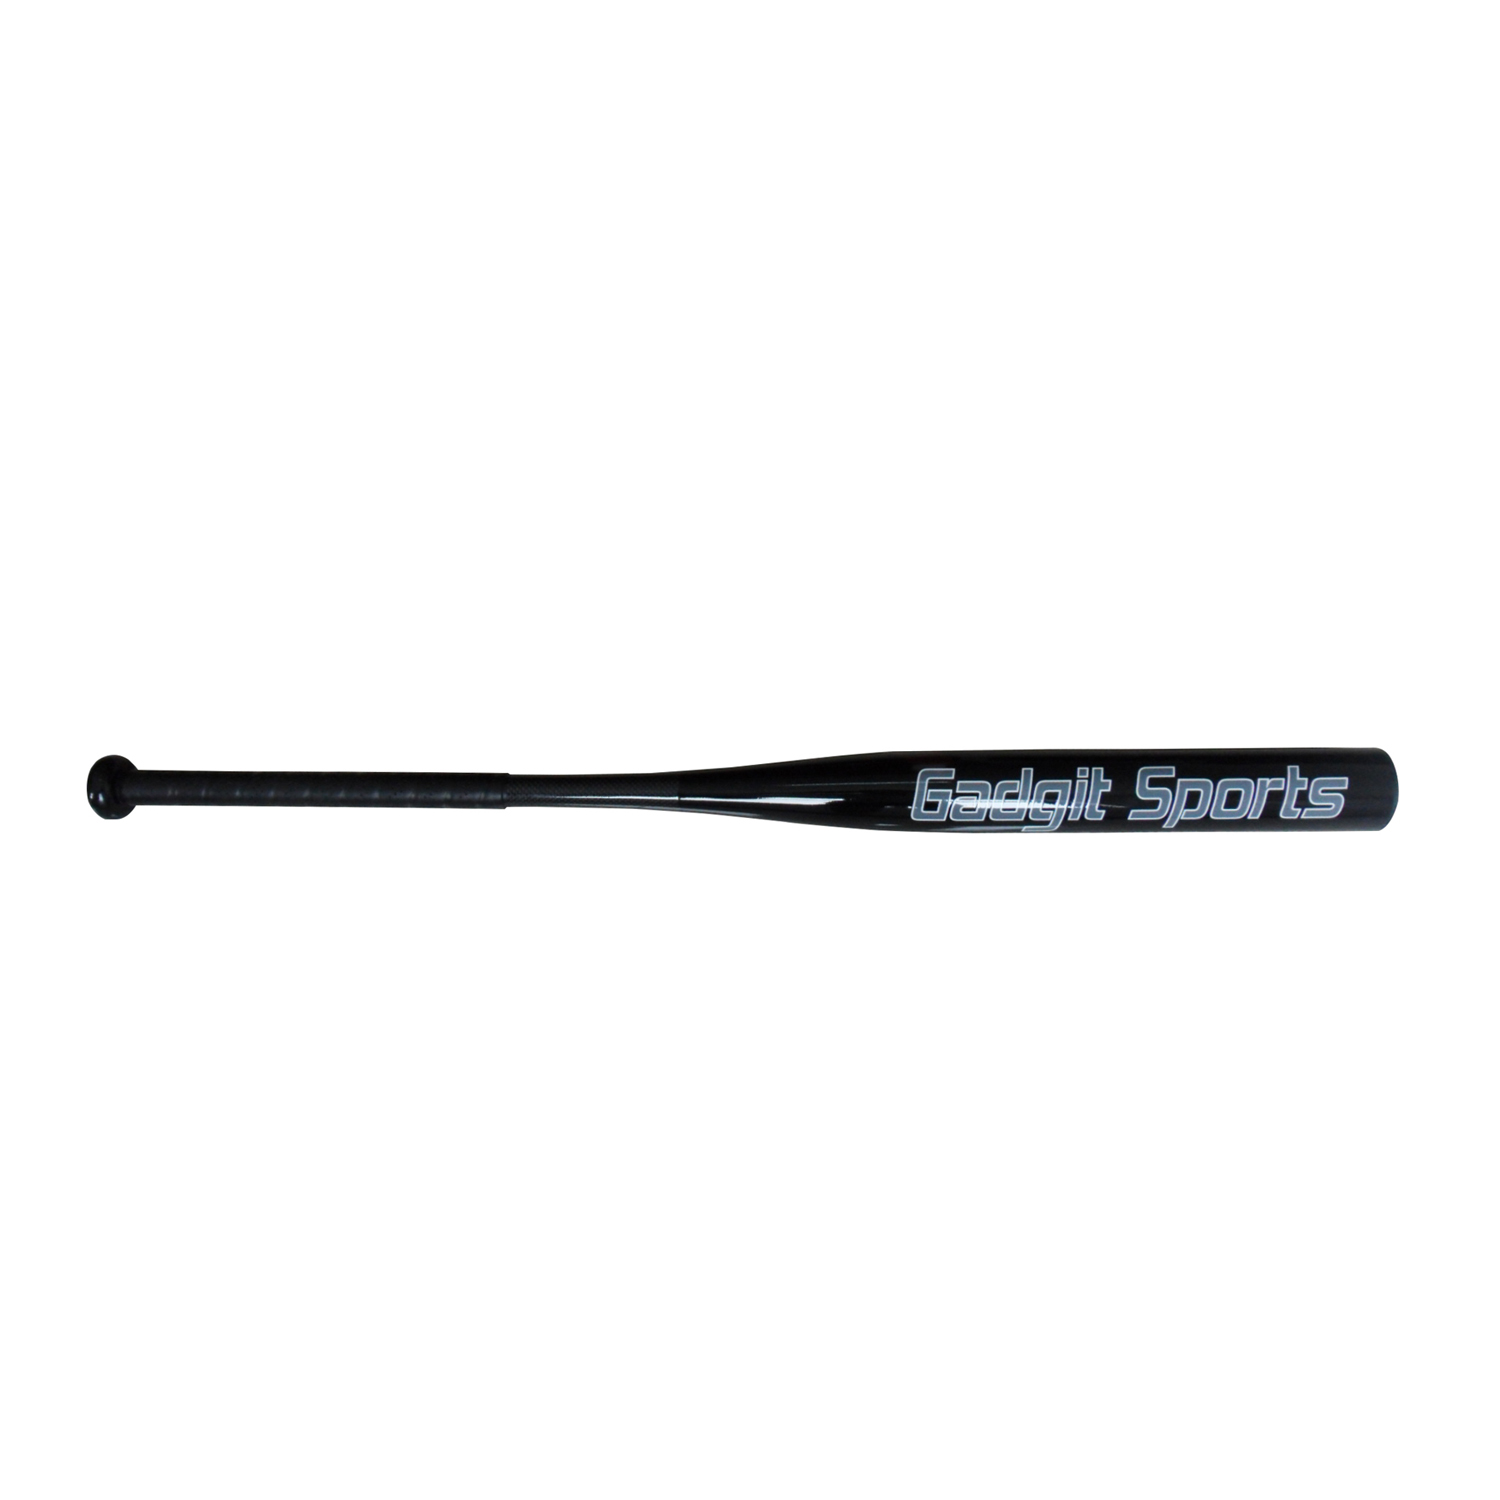 Professional Customized 34inch Softball Bat